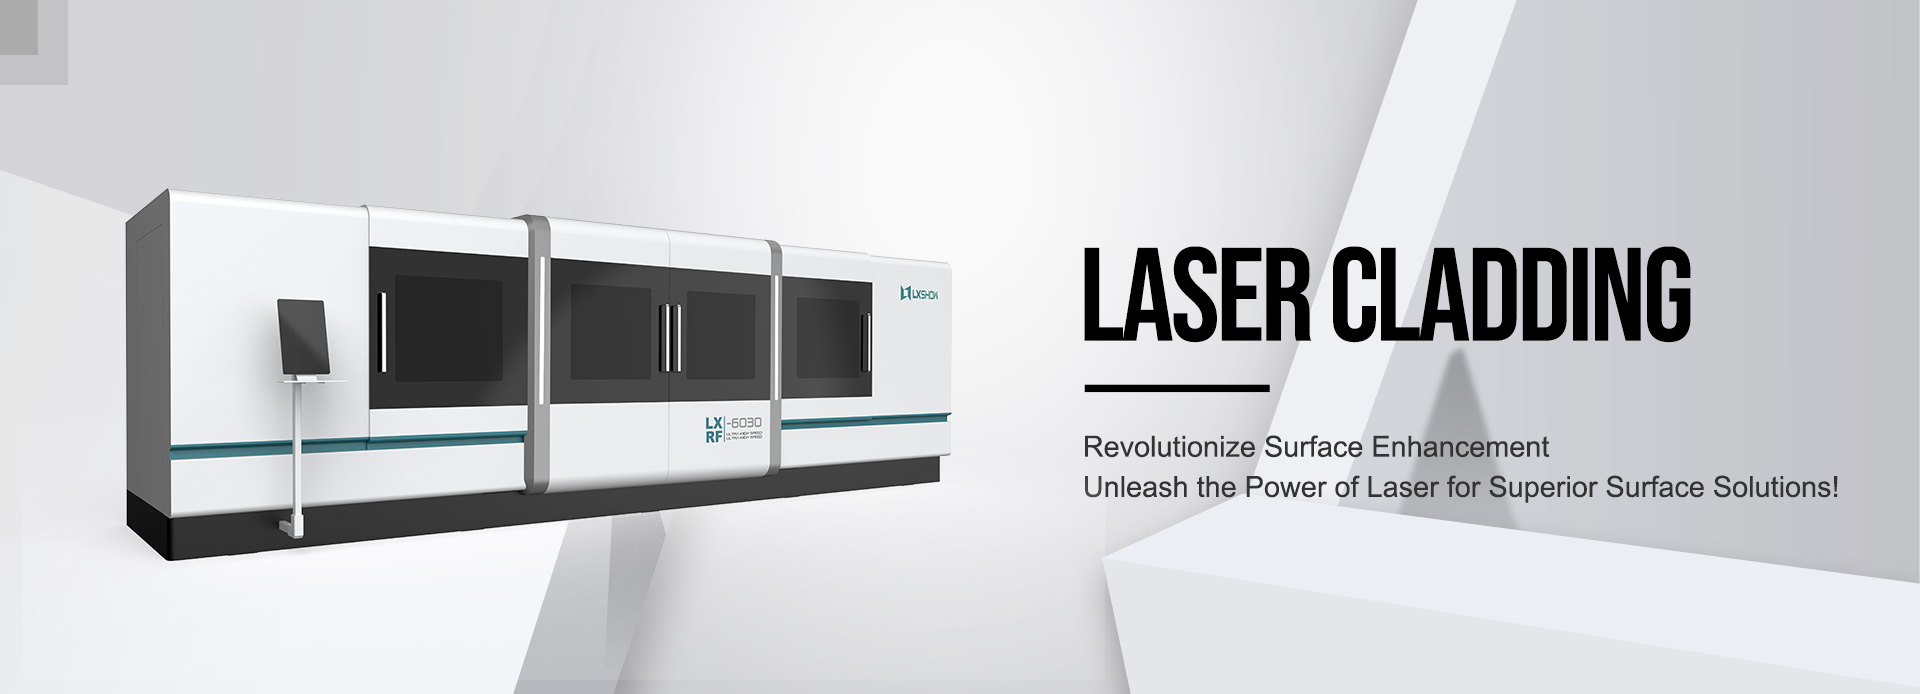 LXRF-6030 ຂາຍຮ້ອນ Single Axis Surround Laser Cladding Machine for Metal